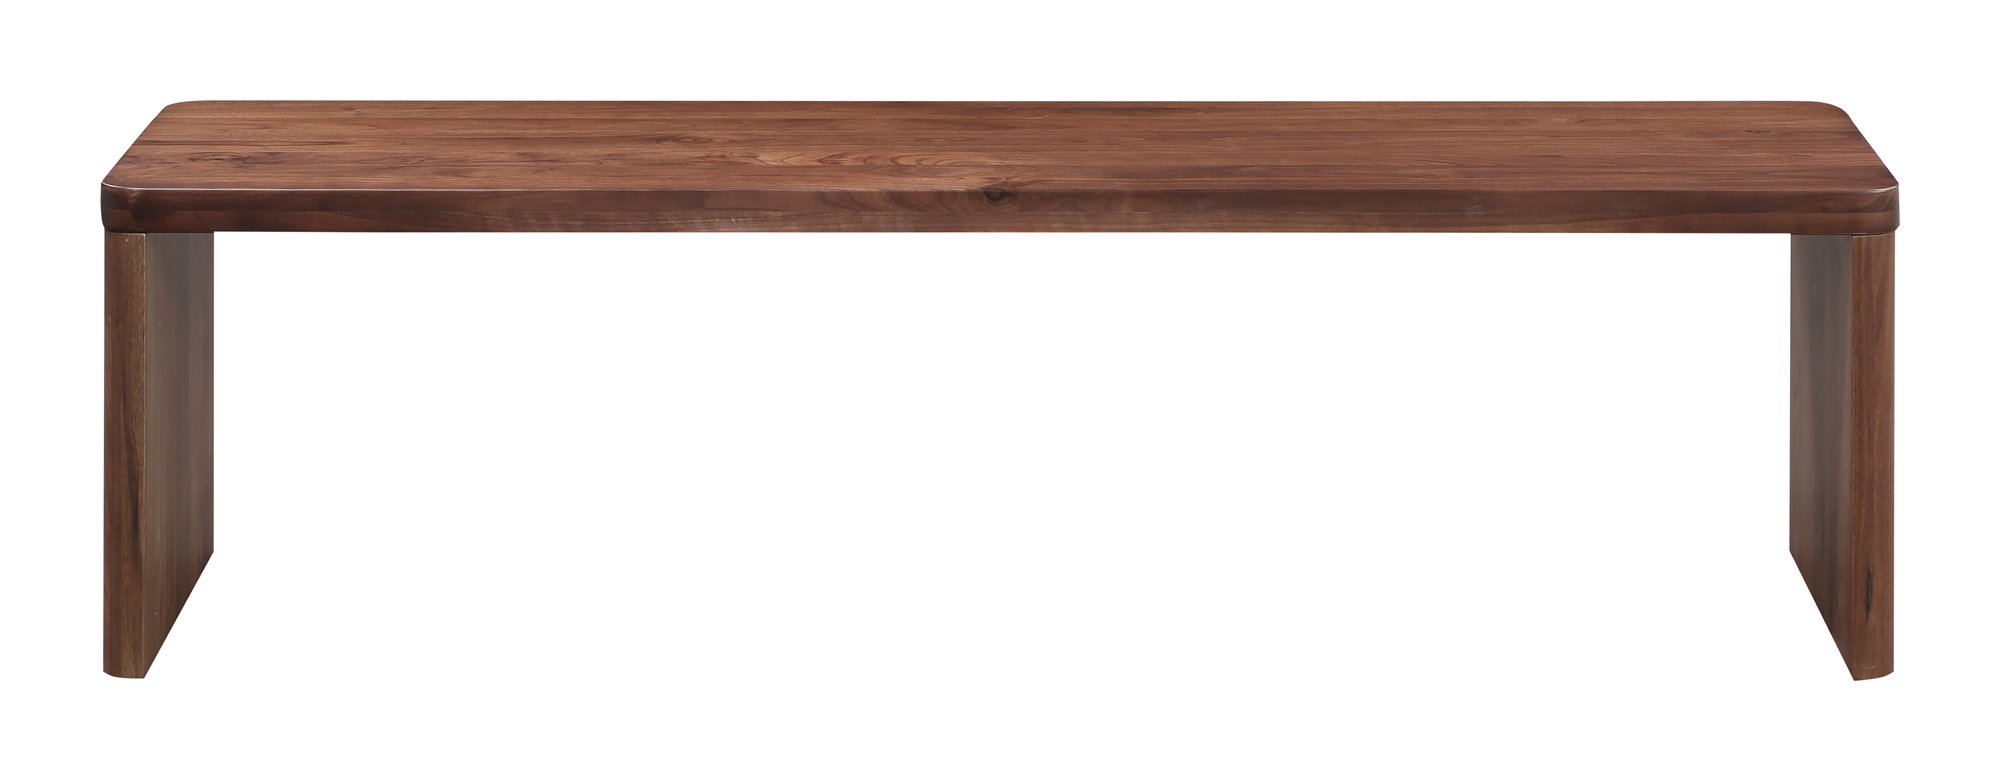 Form Bench, Seats 4, American Walnut - Image 3